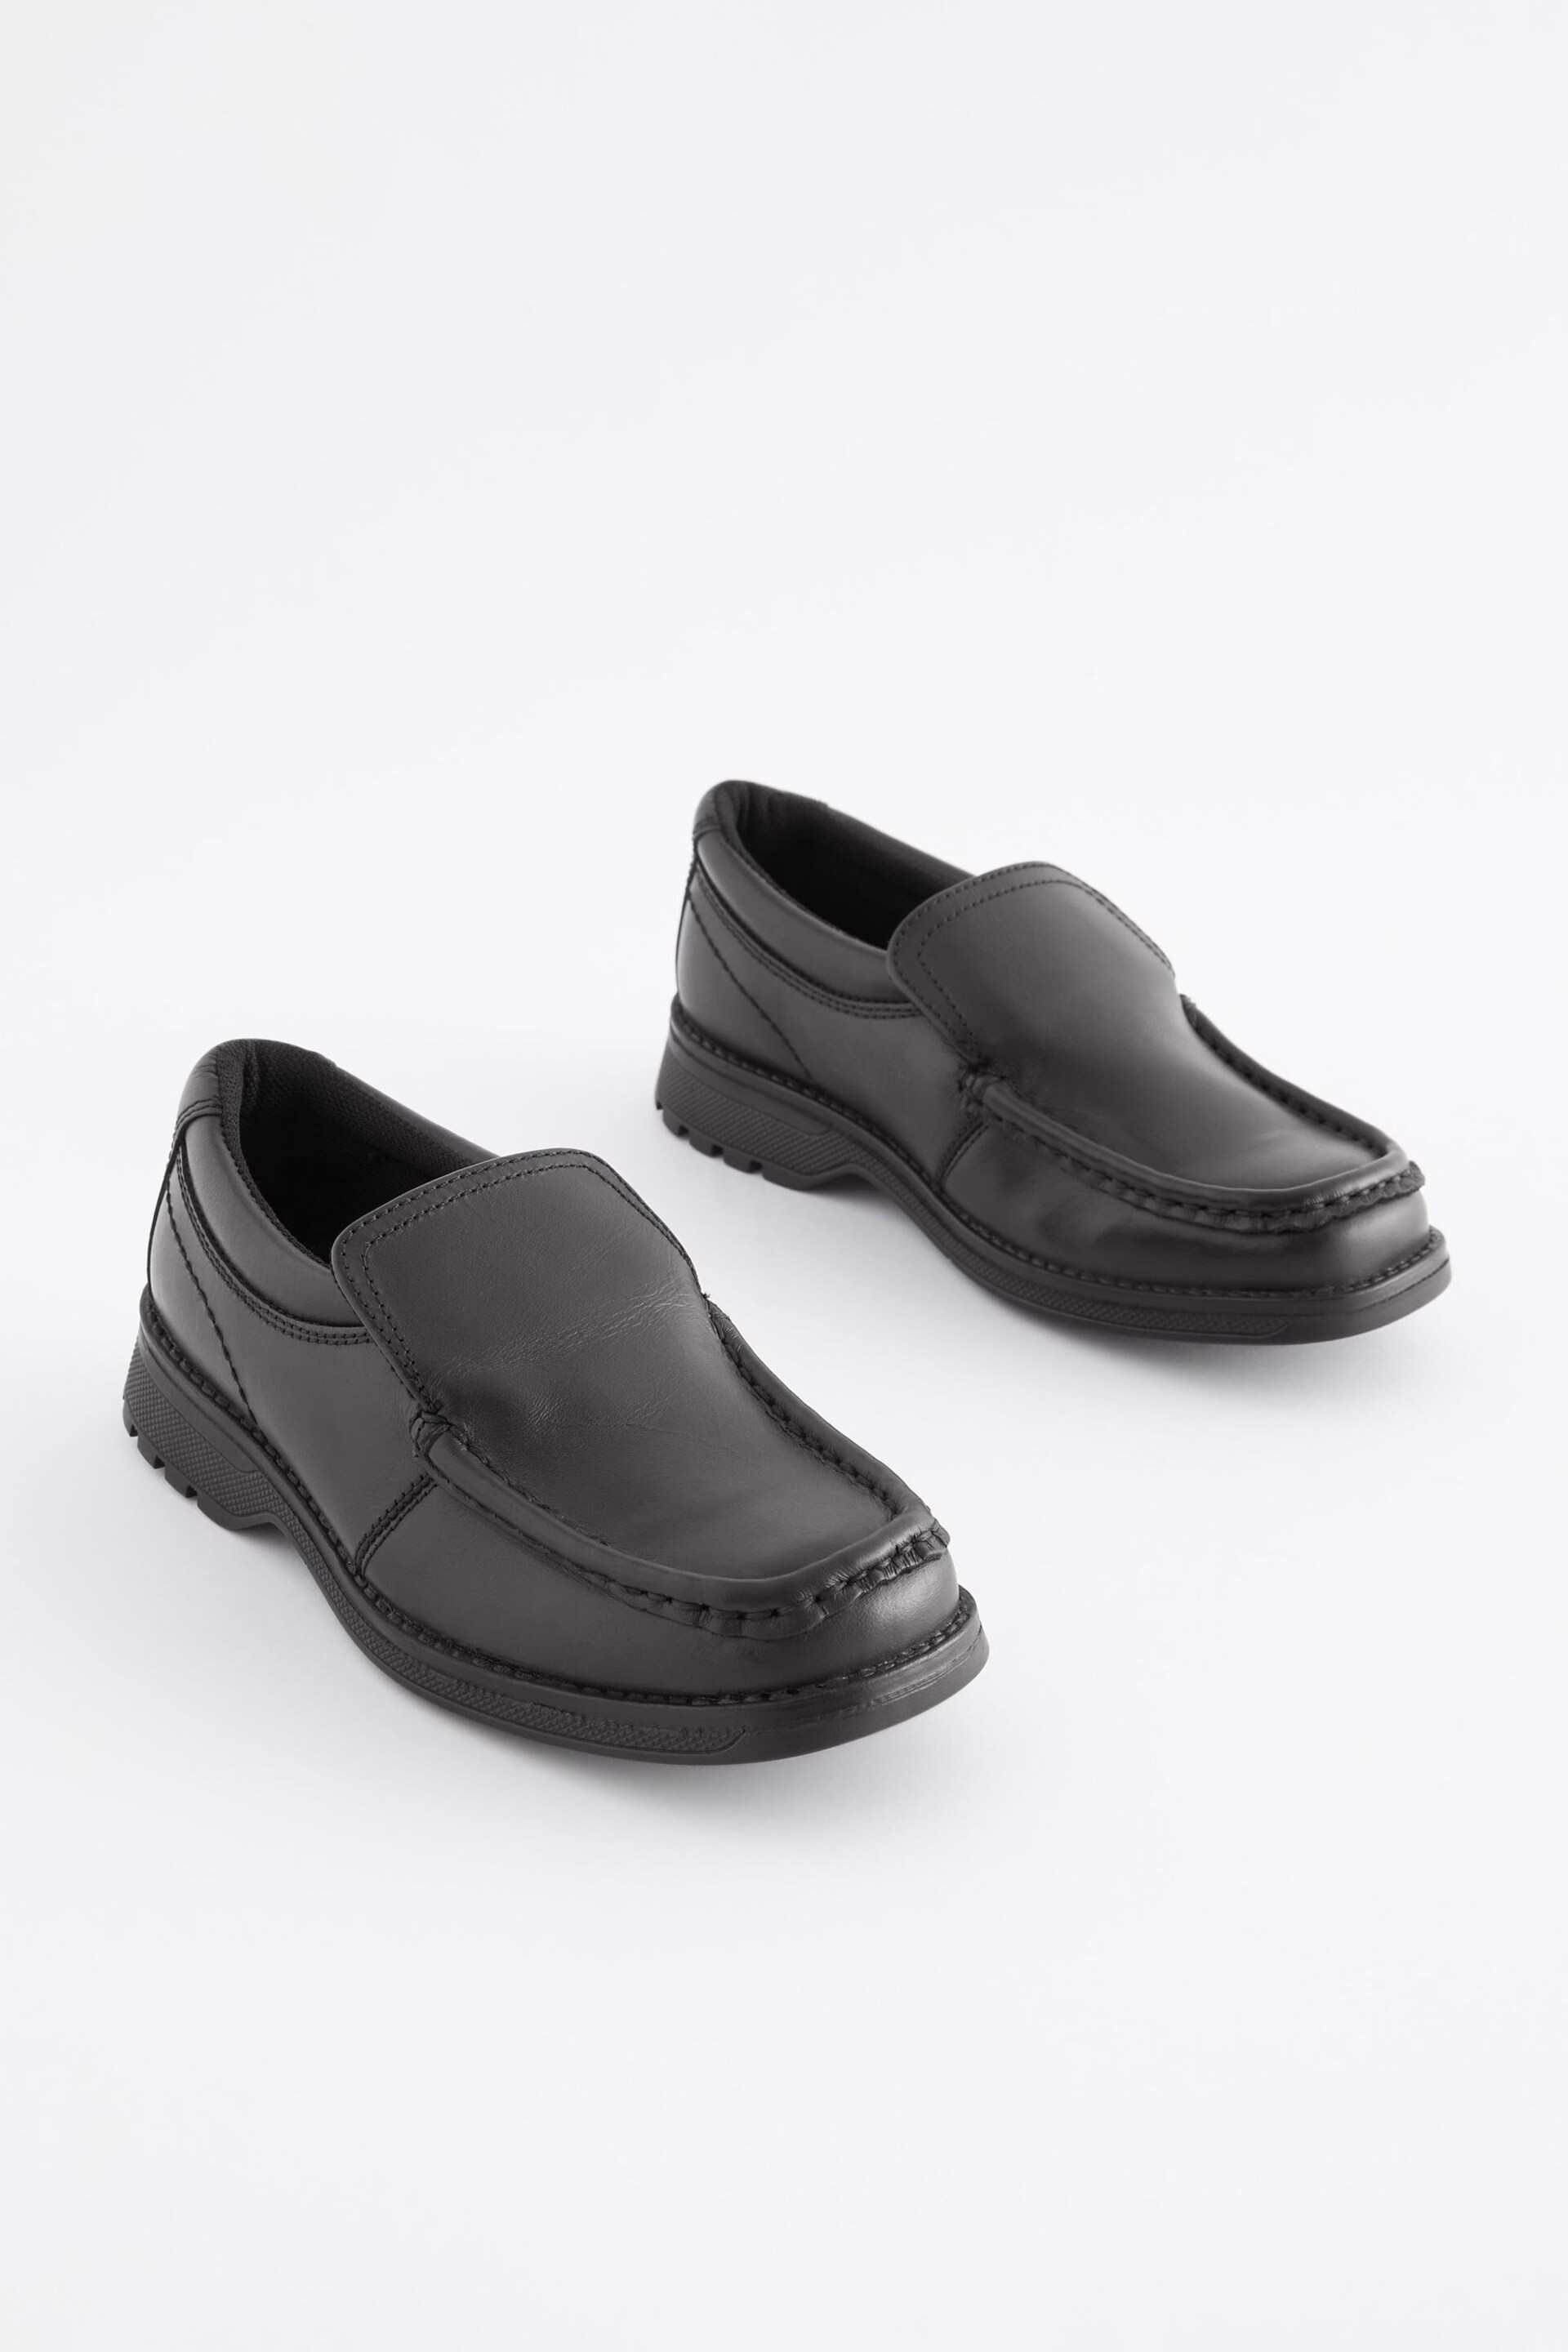 Black Standard Fit (F) School Leather Loafer Shoes - Image 1 of 7